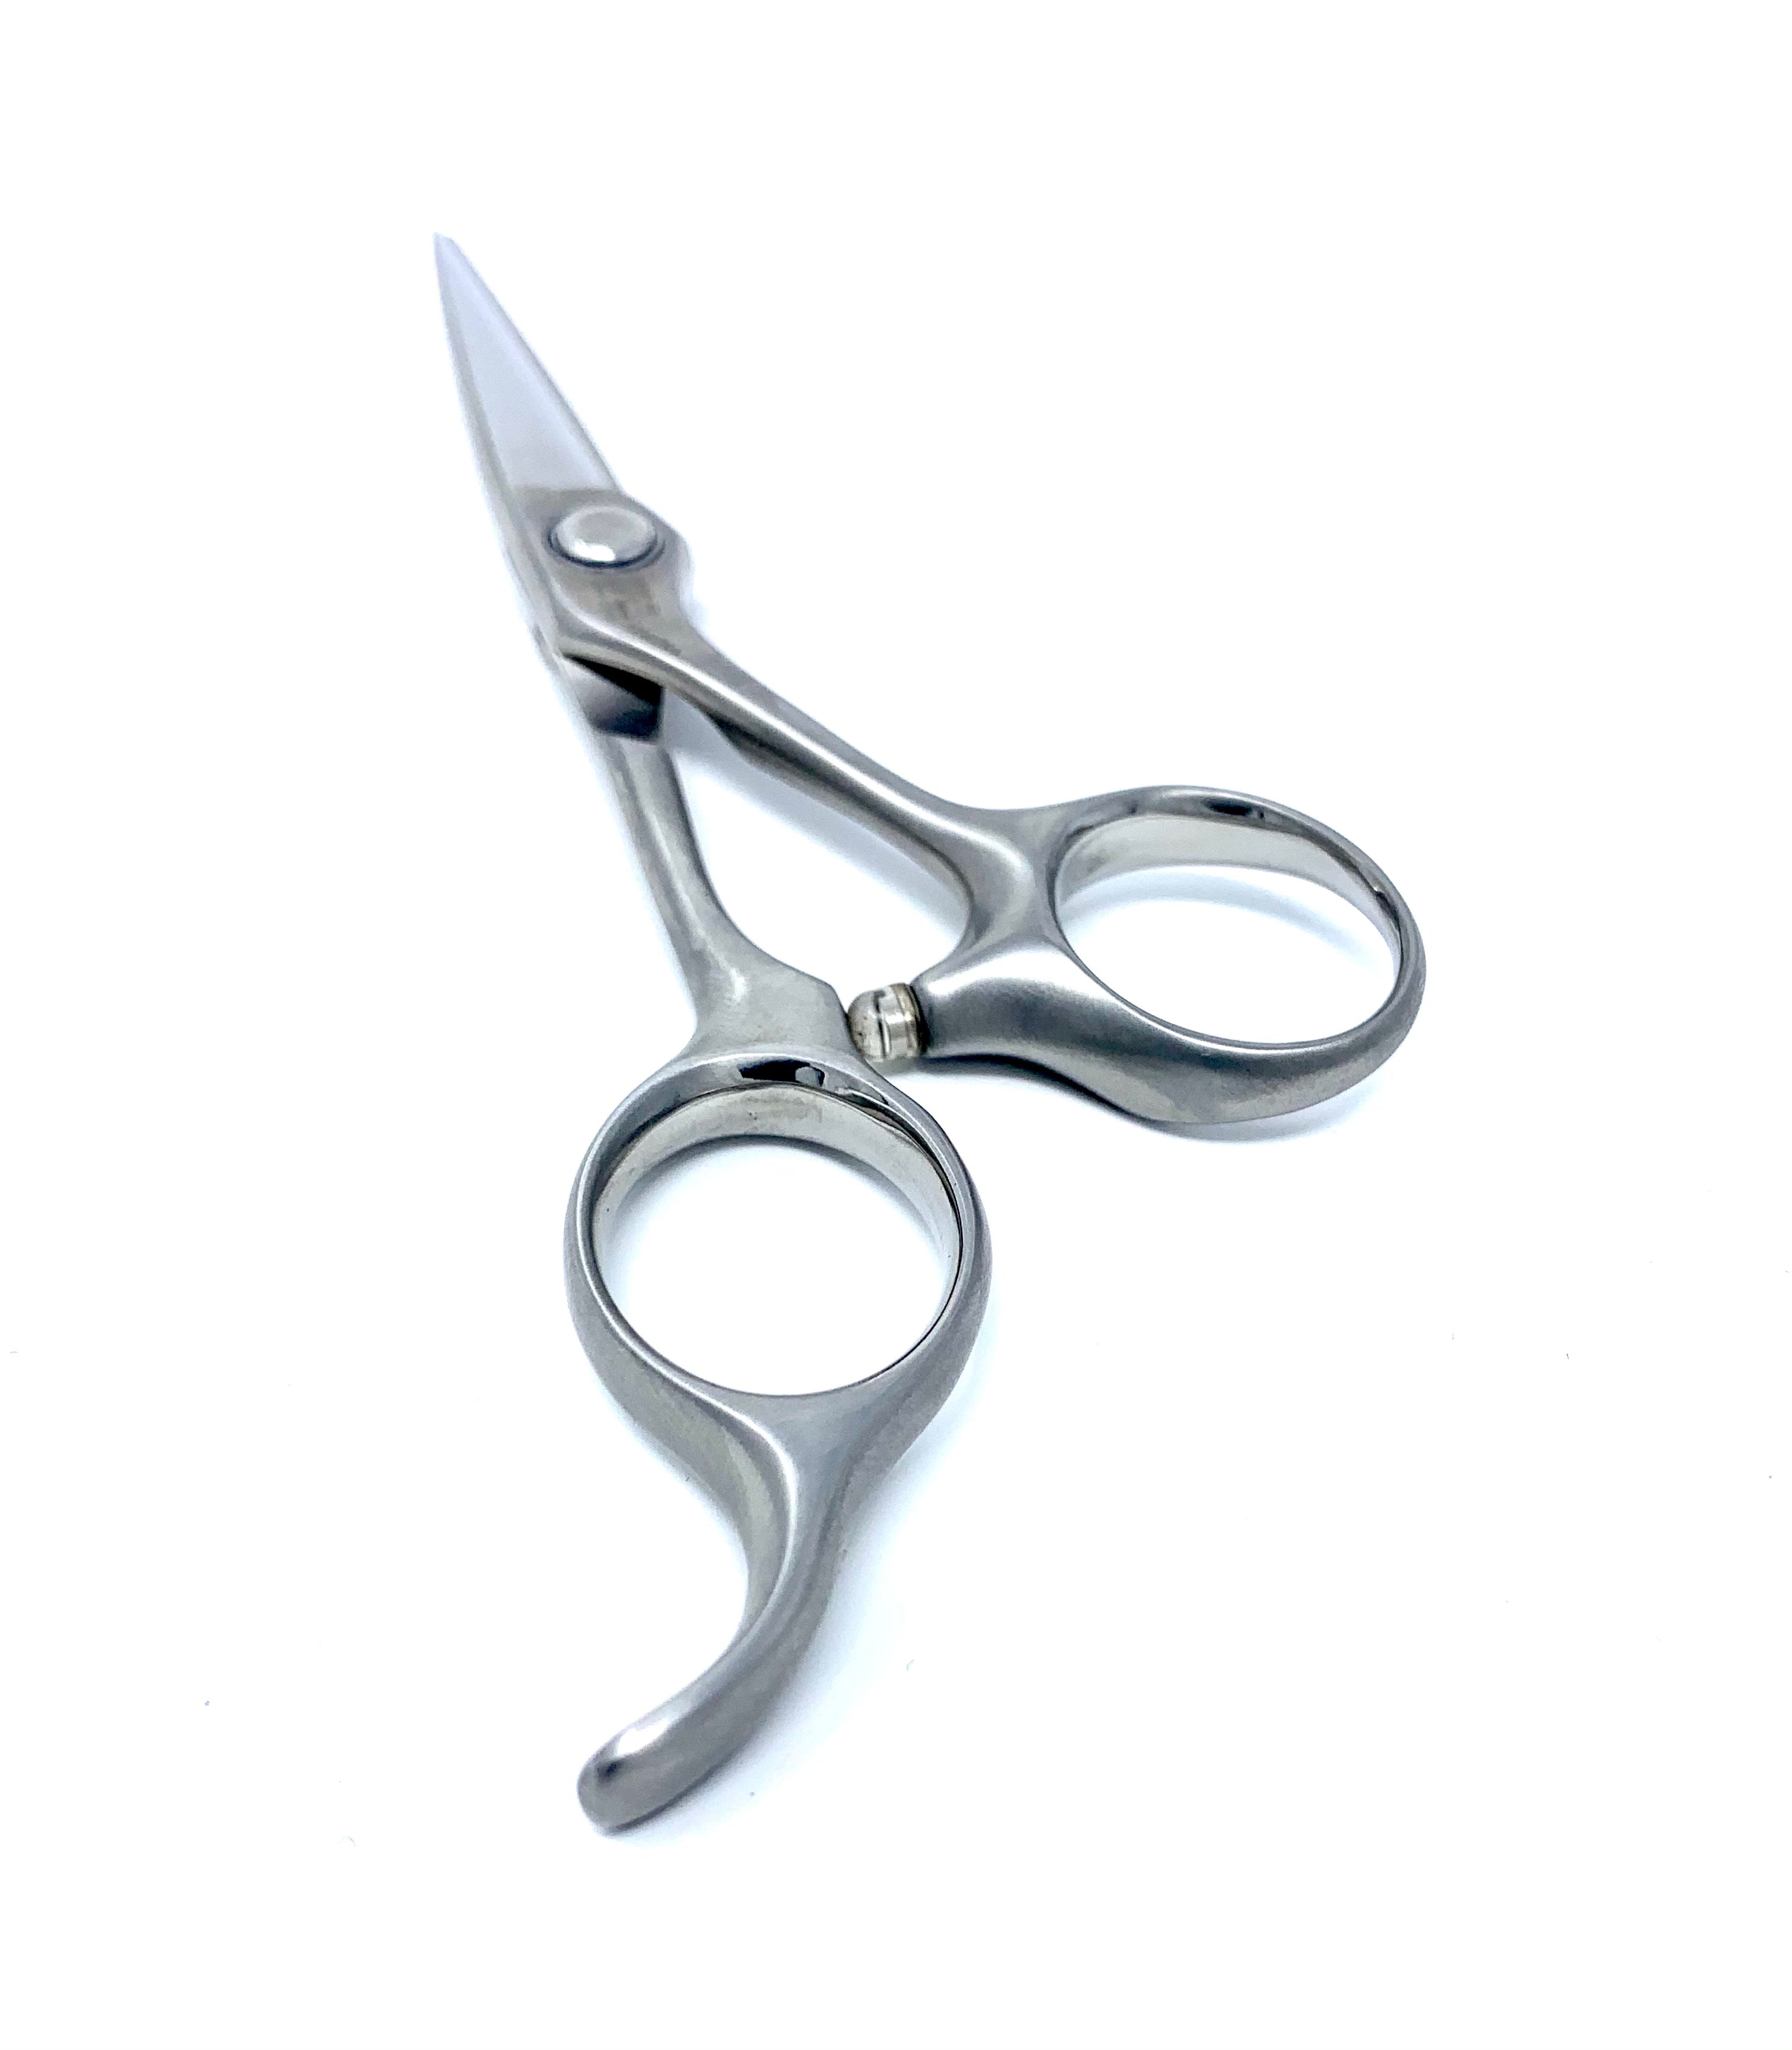 Stainless Steel Shear Scissors: Kore Classic - 5 - FHI Heat™